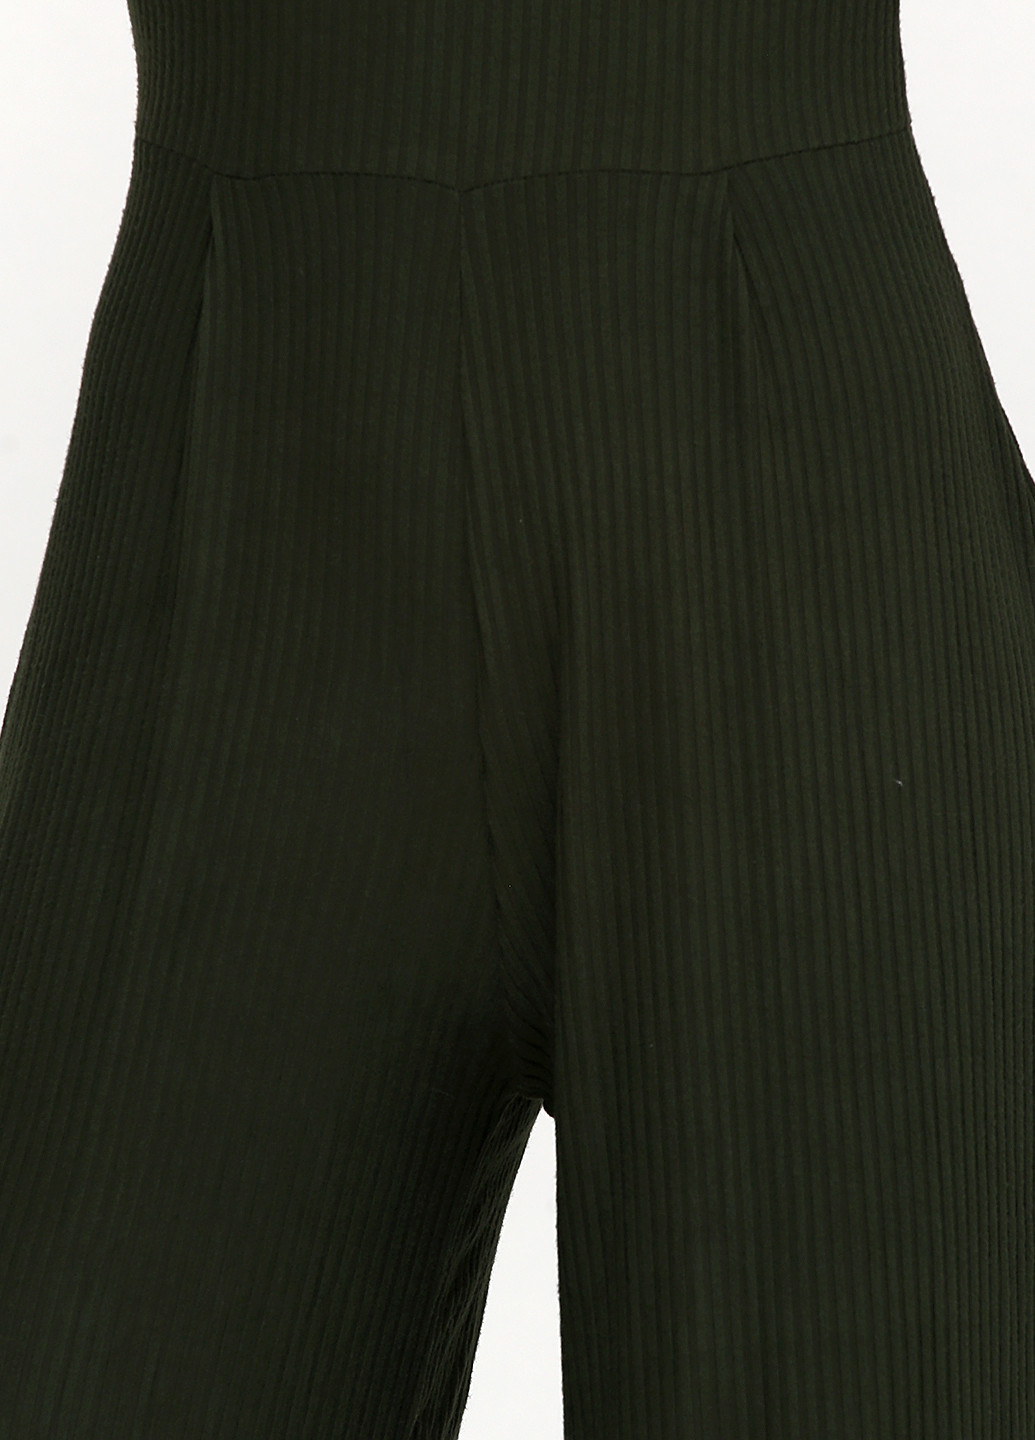 Комбинезон Bershka комбинезон-брюки однотонный темно-зелёный кэжуал